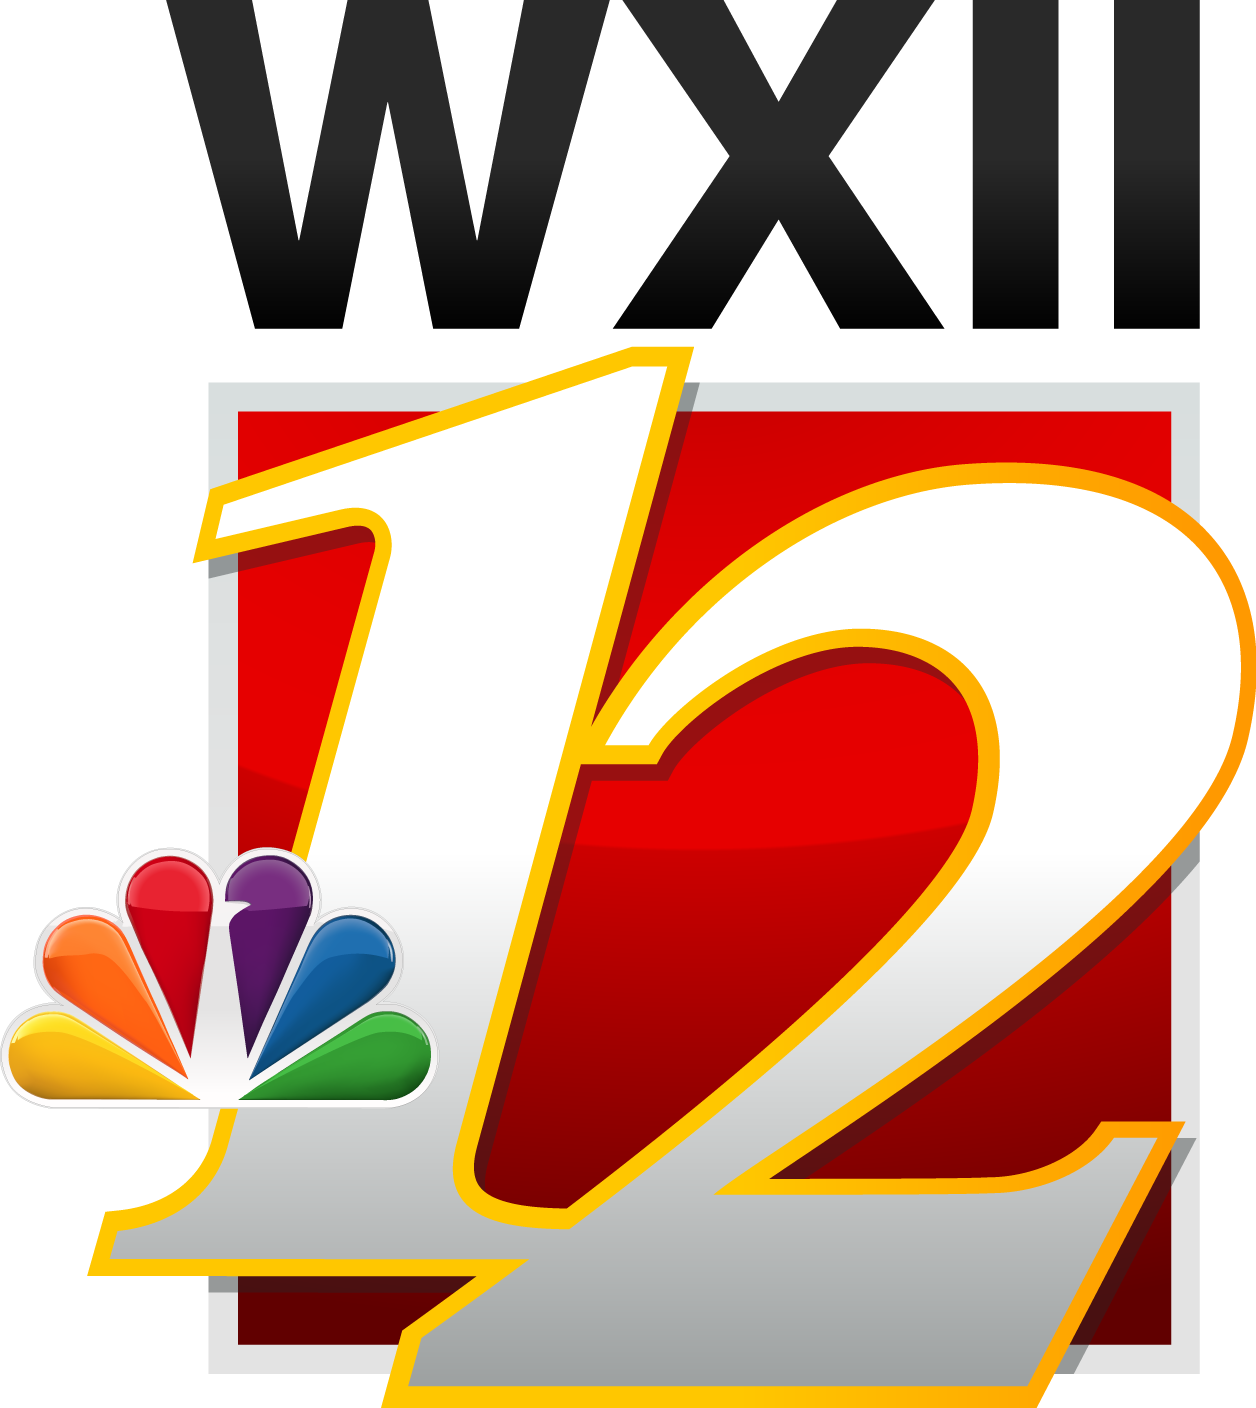 3c. WXII (Media Partner)